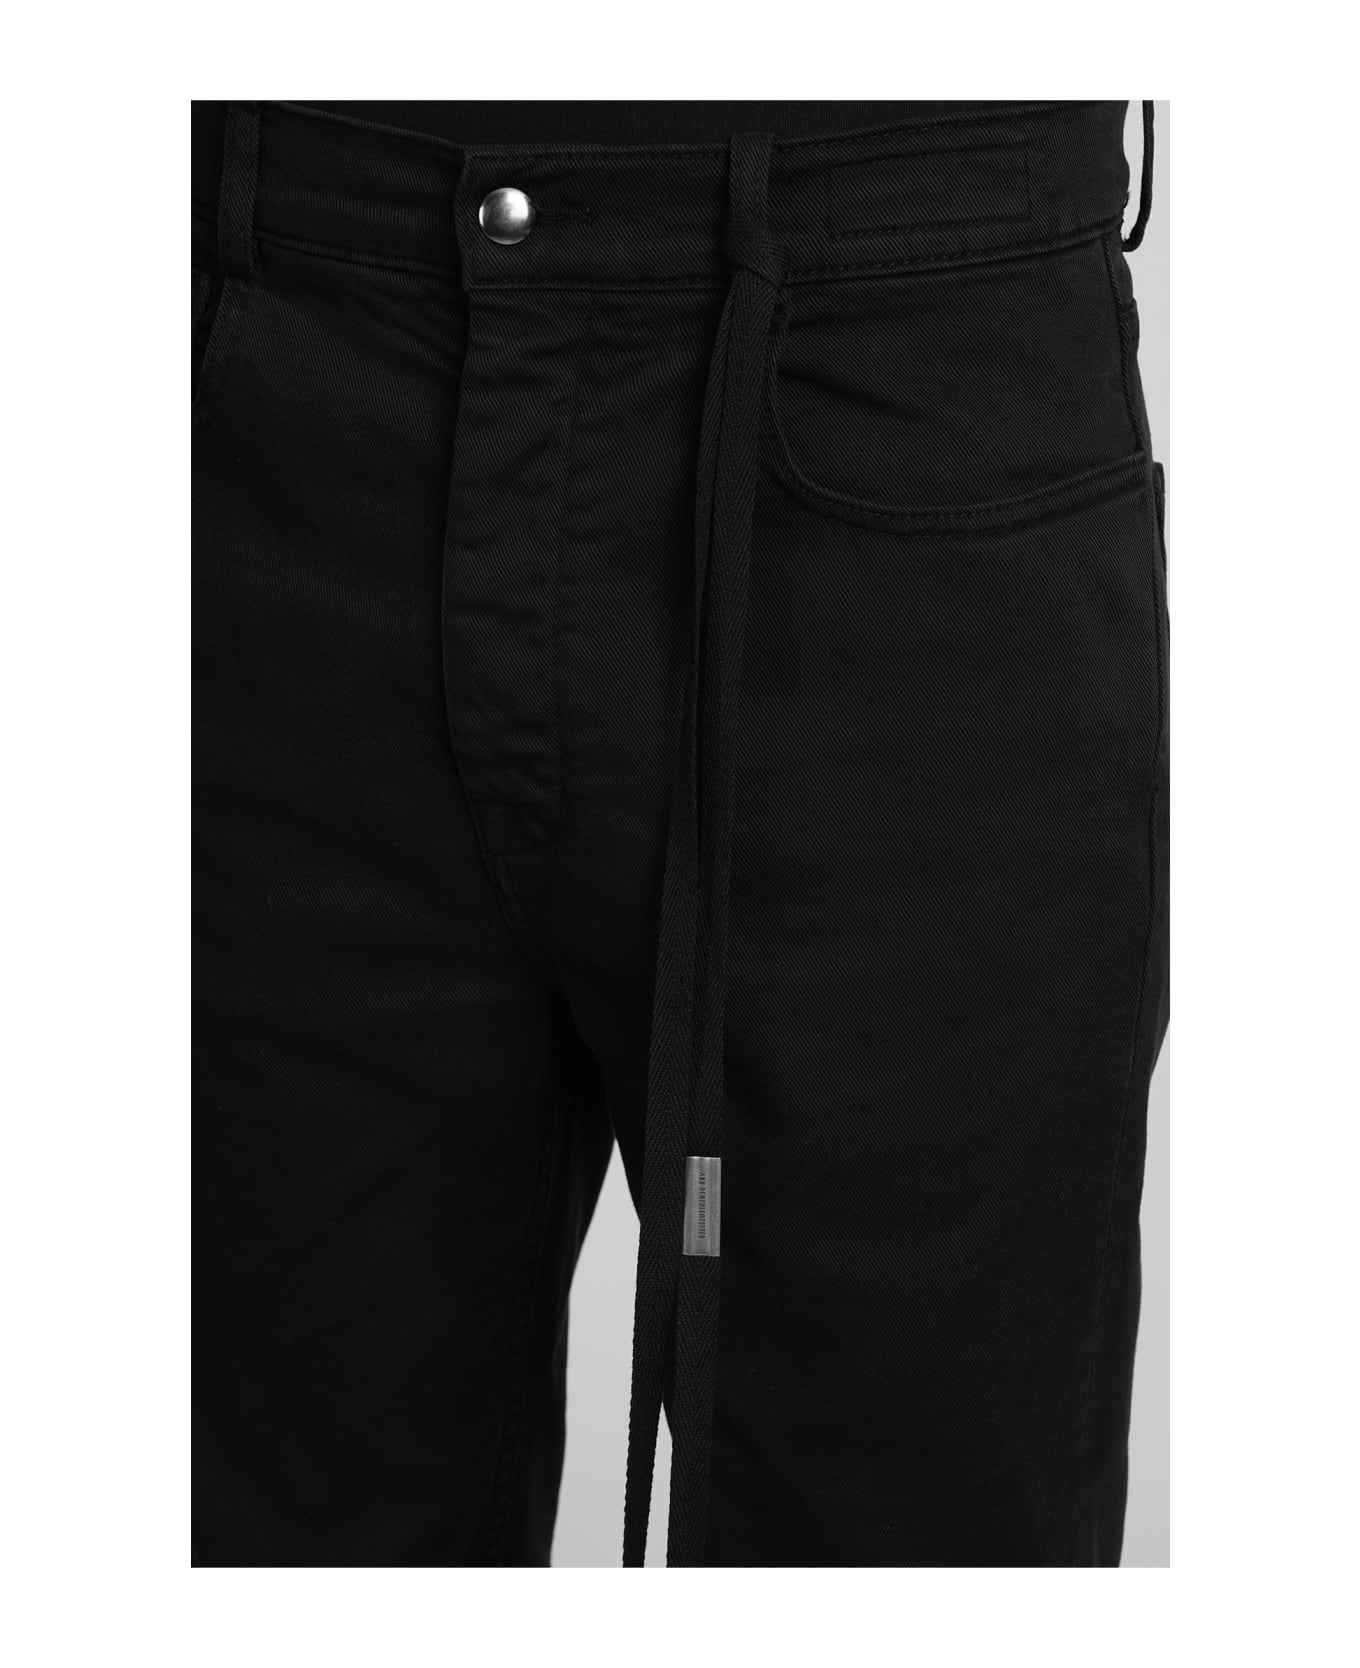 Ann Demeulemeester Jeans In Black Cotton - black